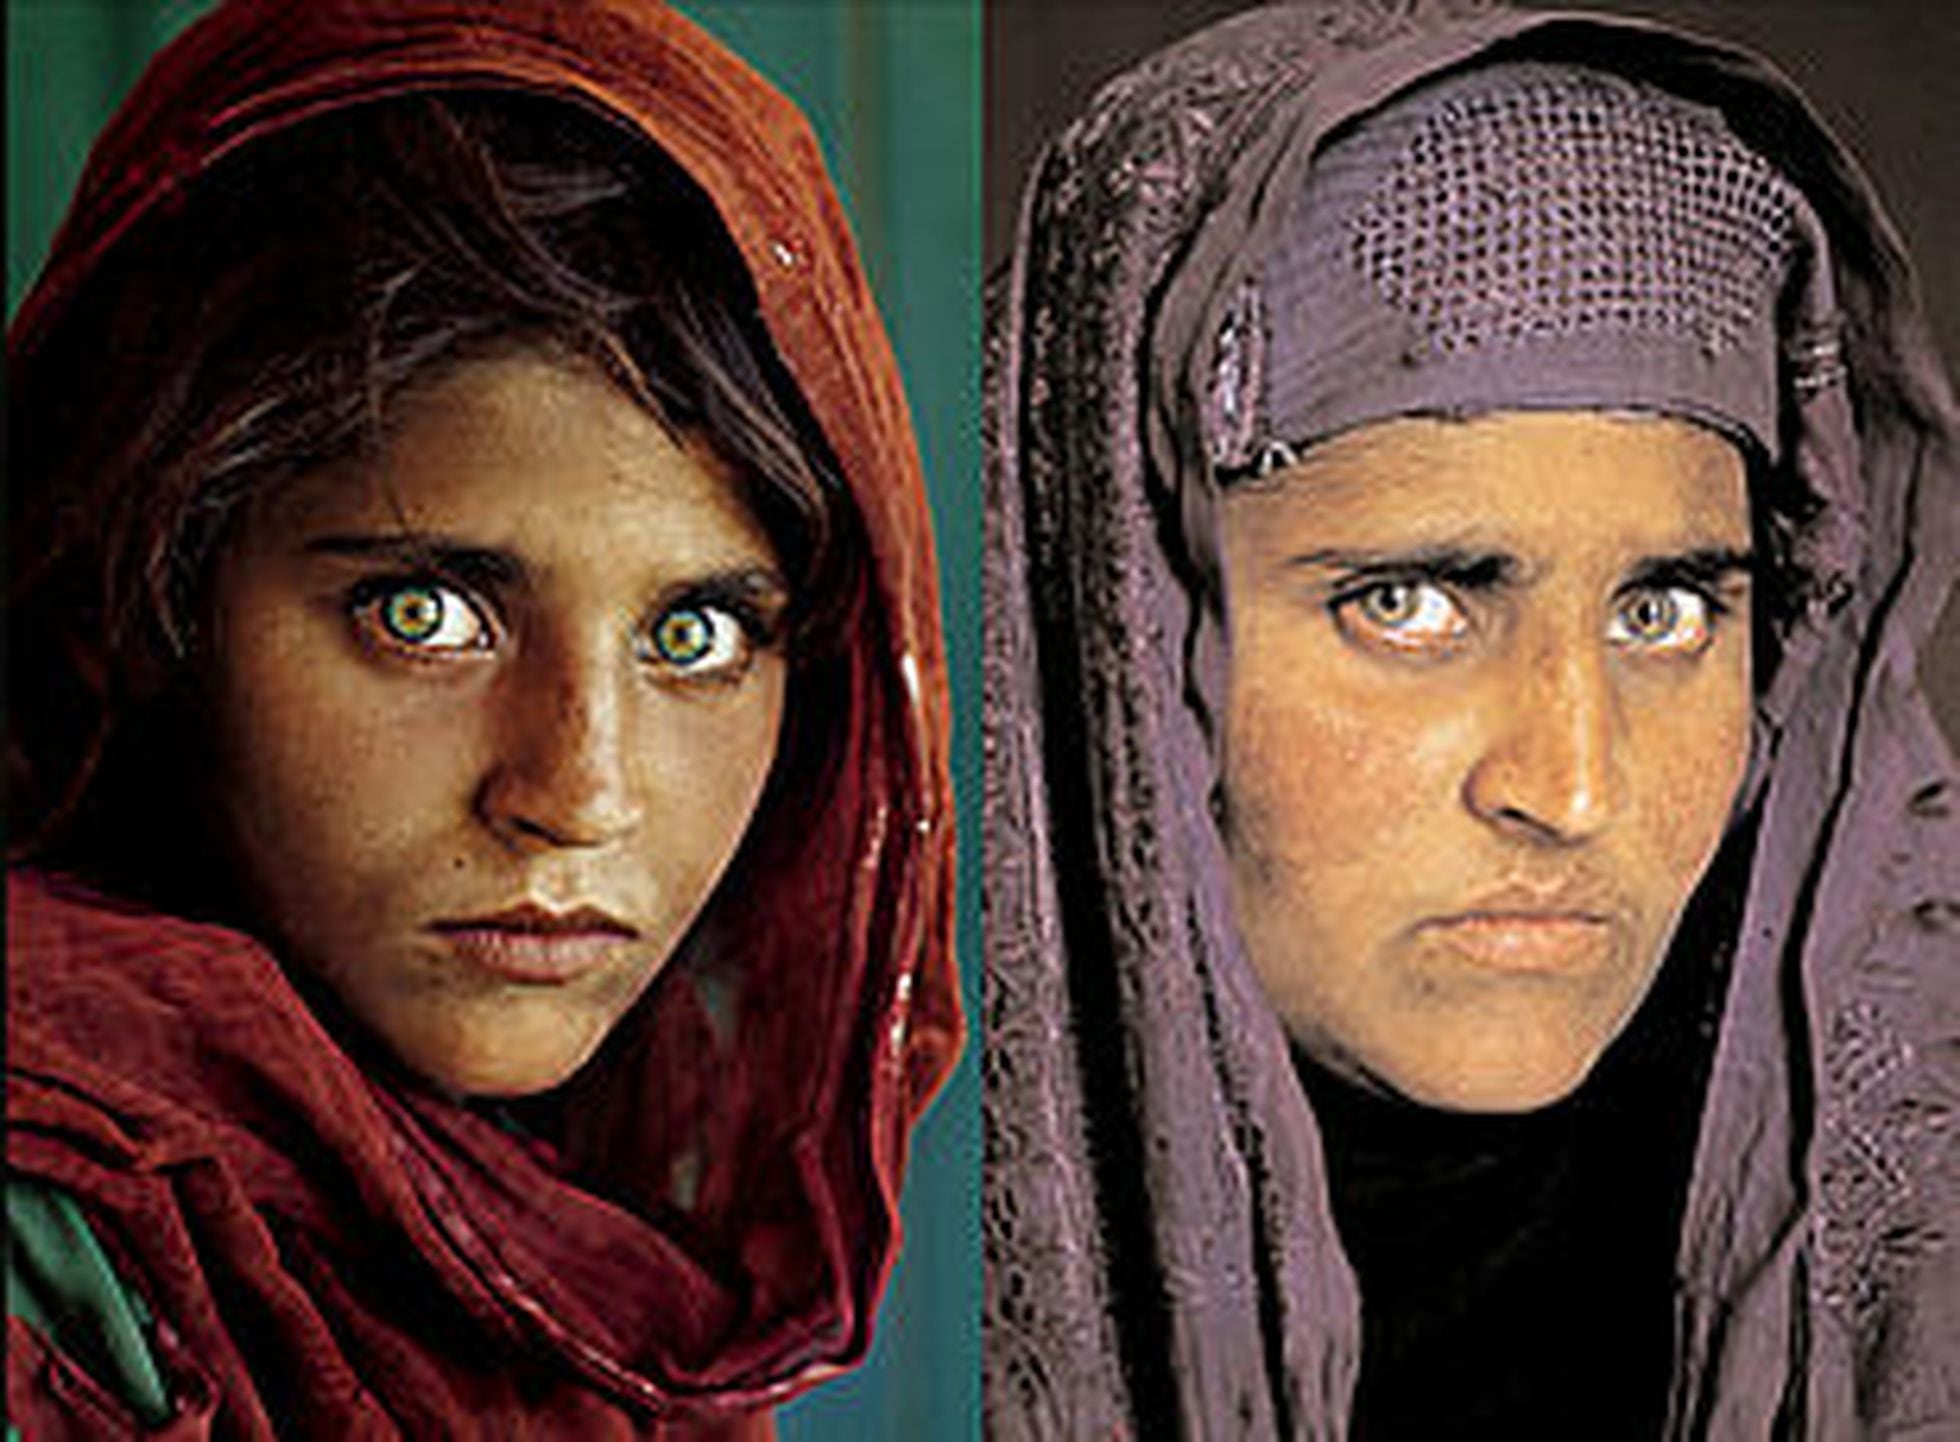 La Niña Que Simbolizó La Tragedia De Afganistán Vuelve A Ser Fotografiada Internacional El PaÍs 